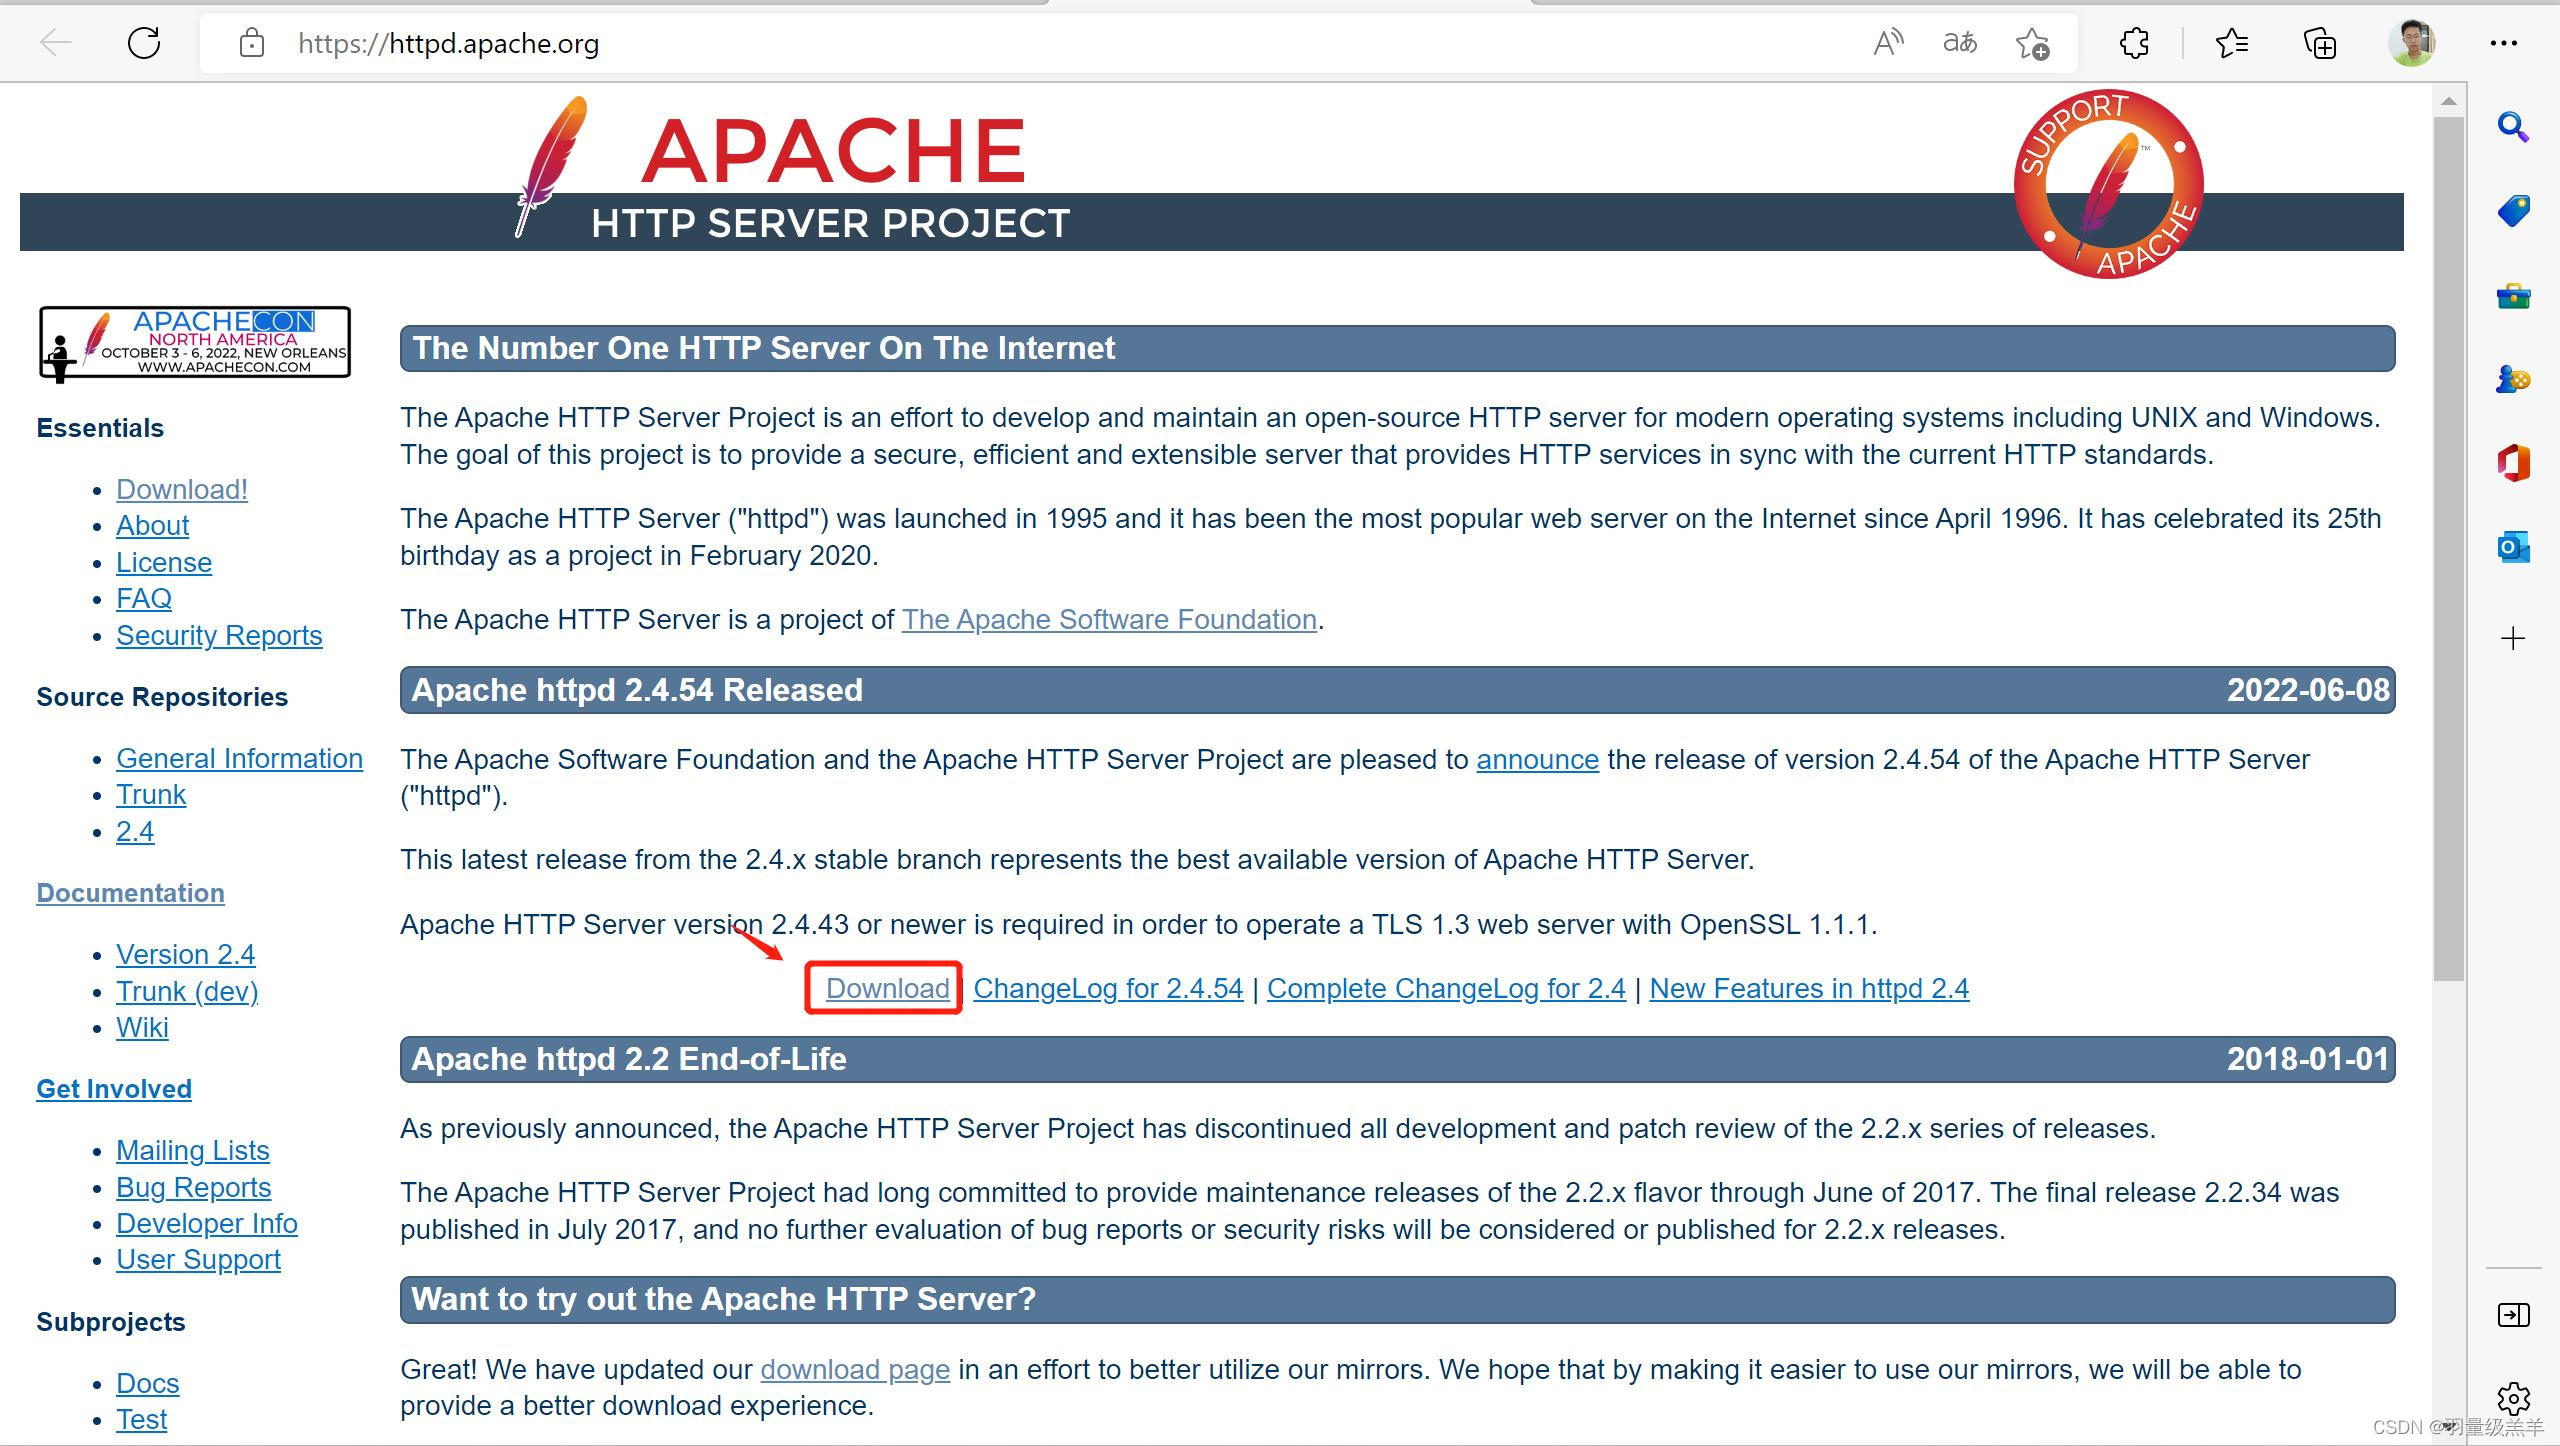 Windows下Apache安装步骤（一看就会）